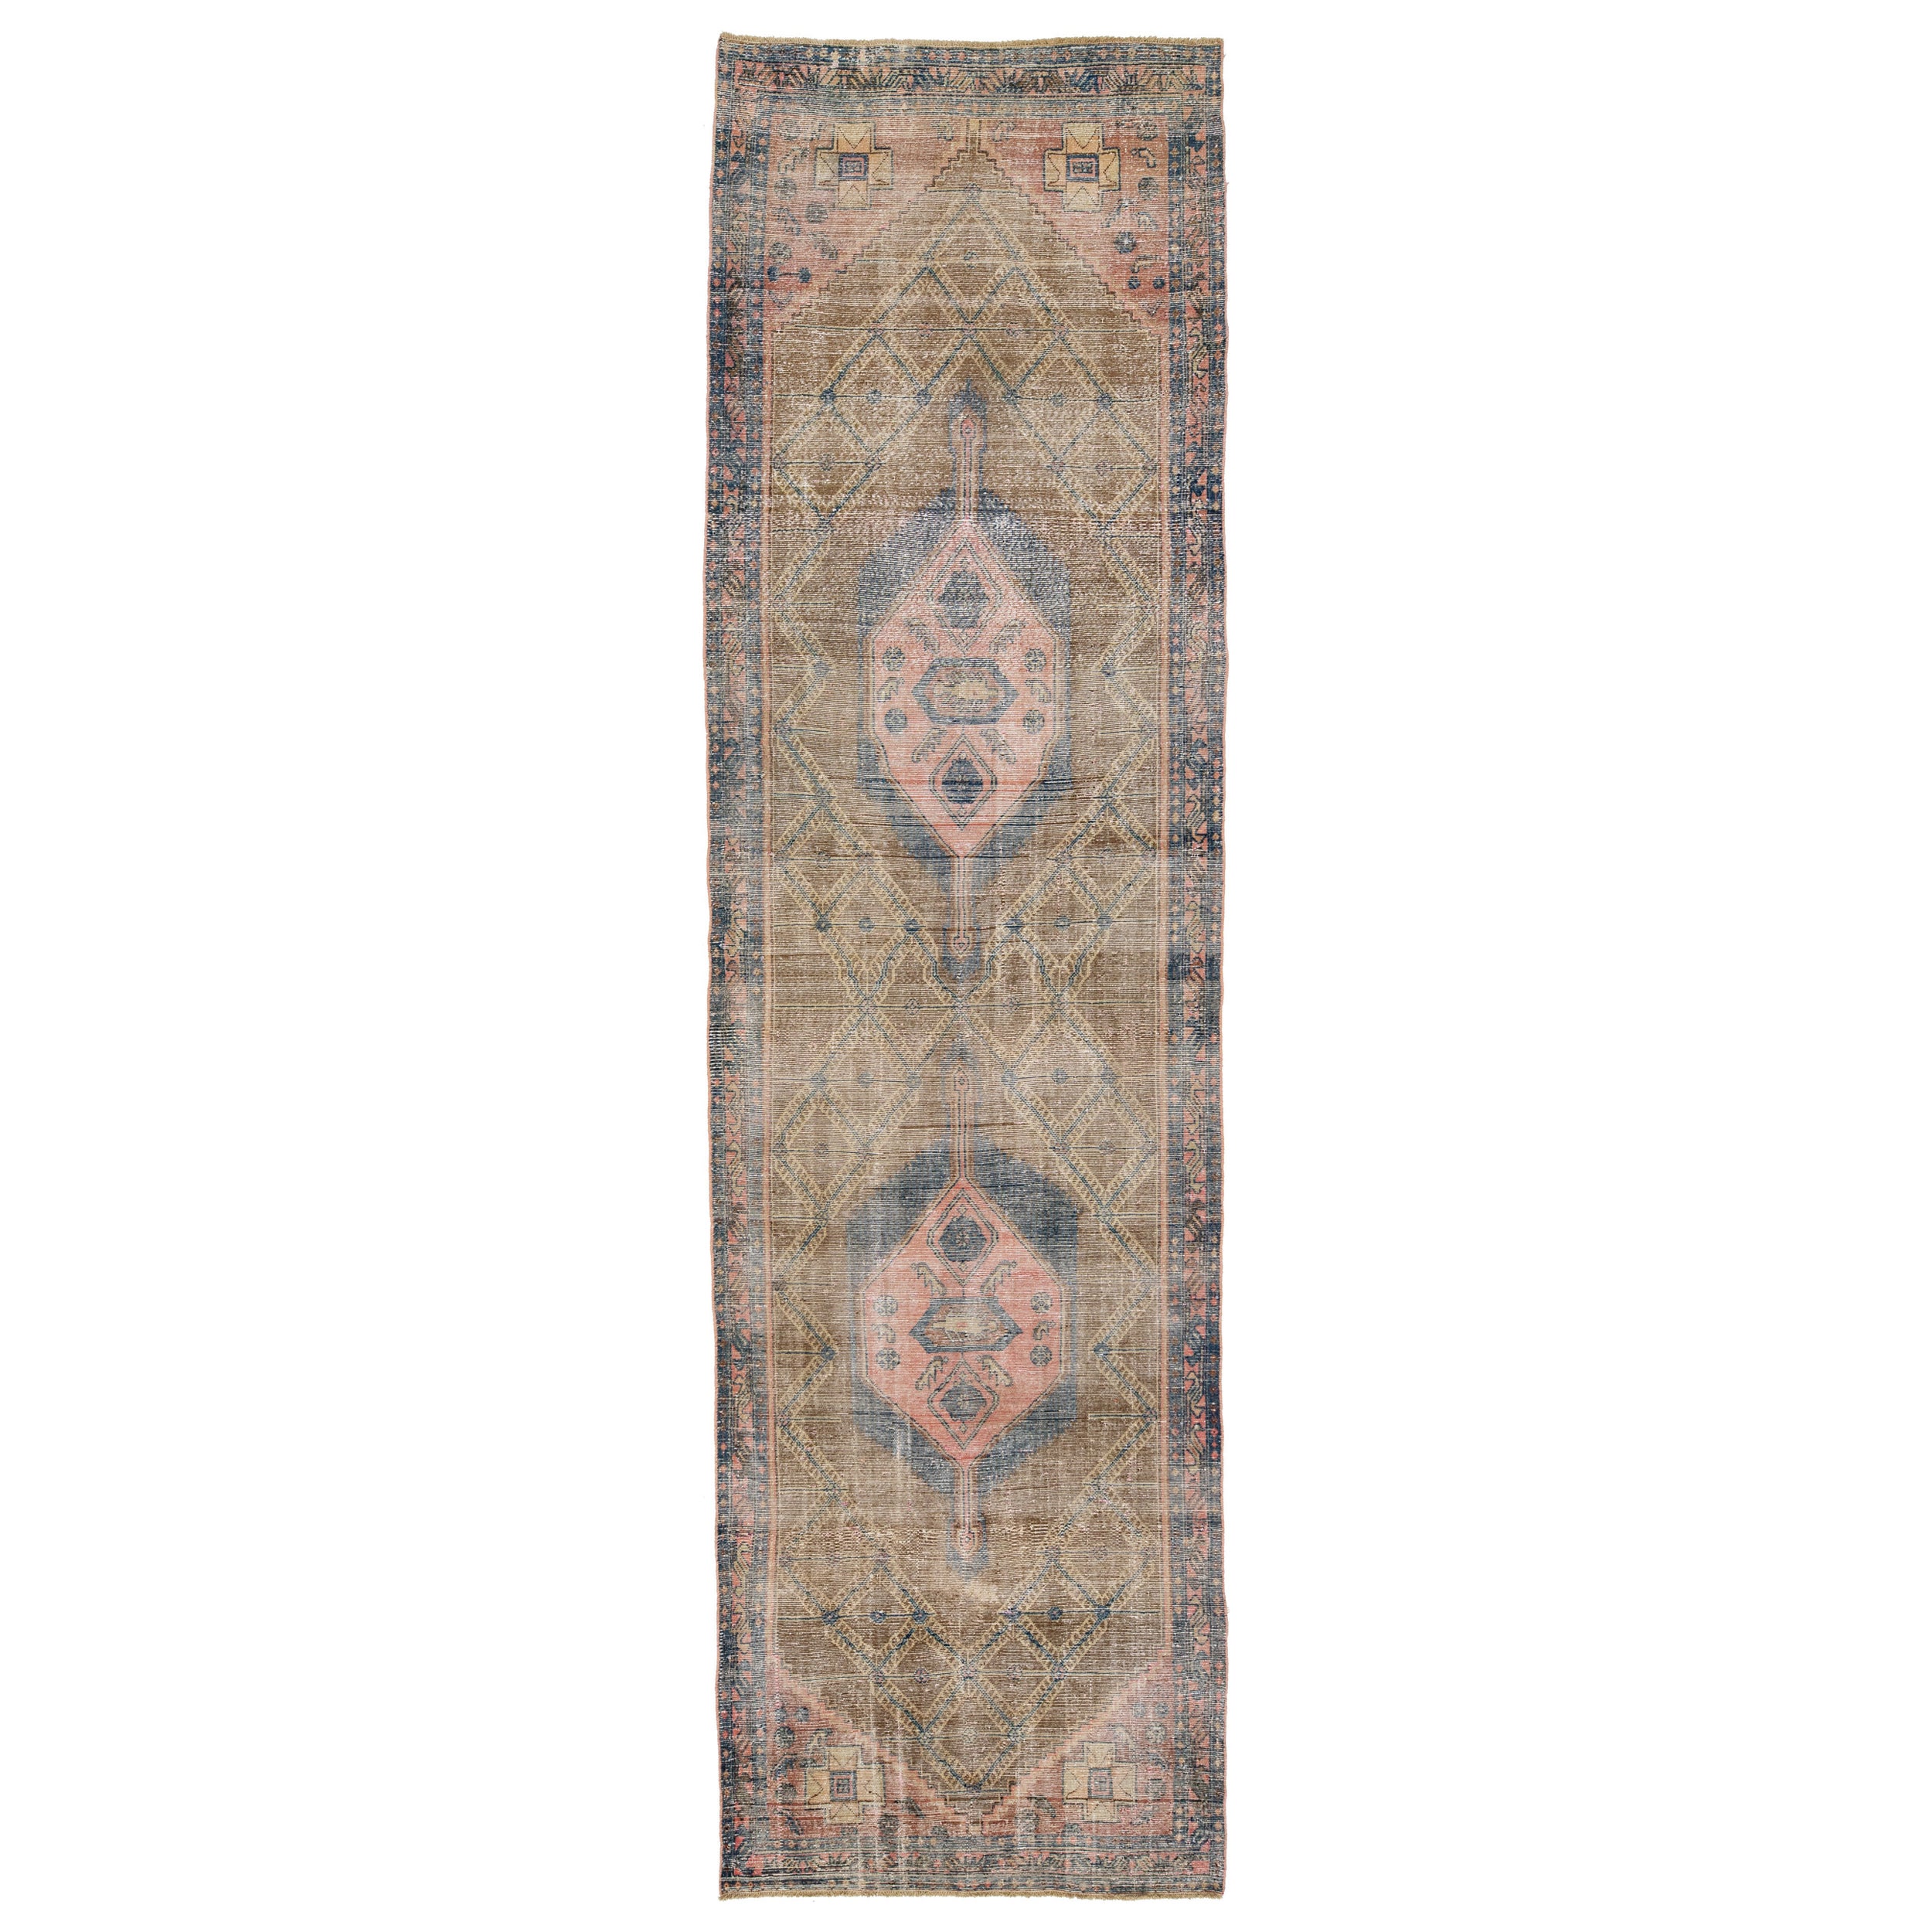 4 x 15 Vintage Distressed Persian Wool Runner In Brown With Tribal Motif